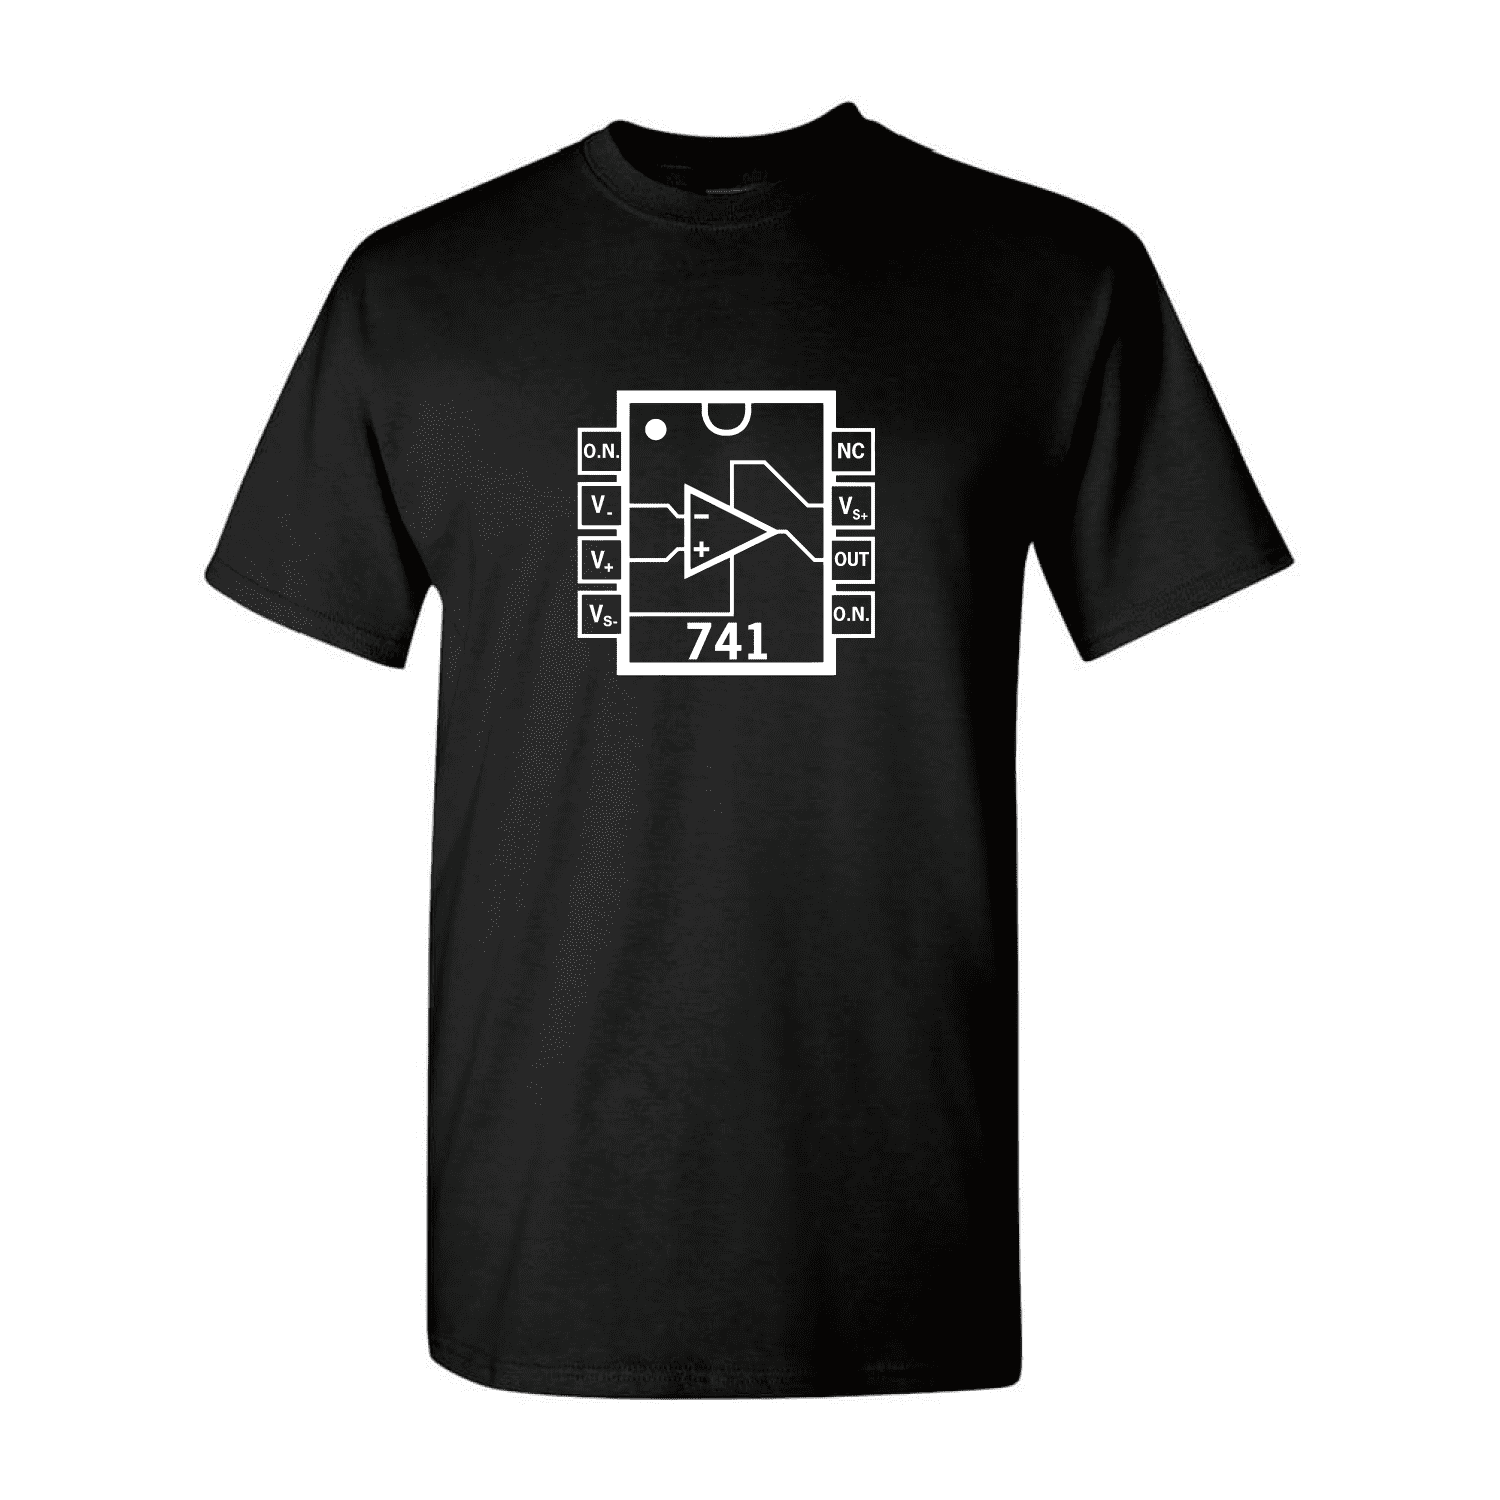 Synth Shirts - 741 (Black) - XL - Elevator Sound